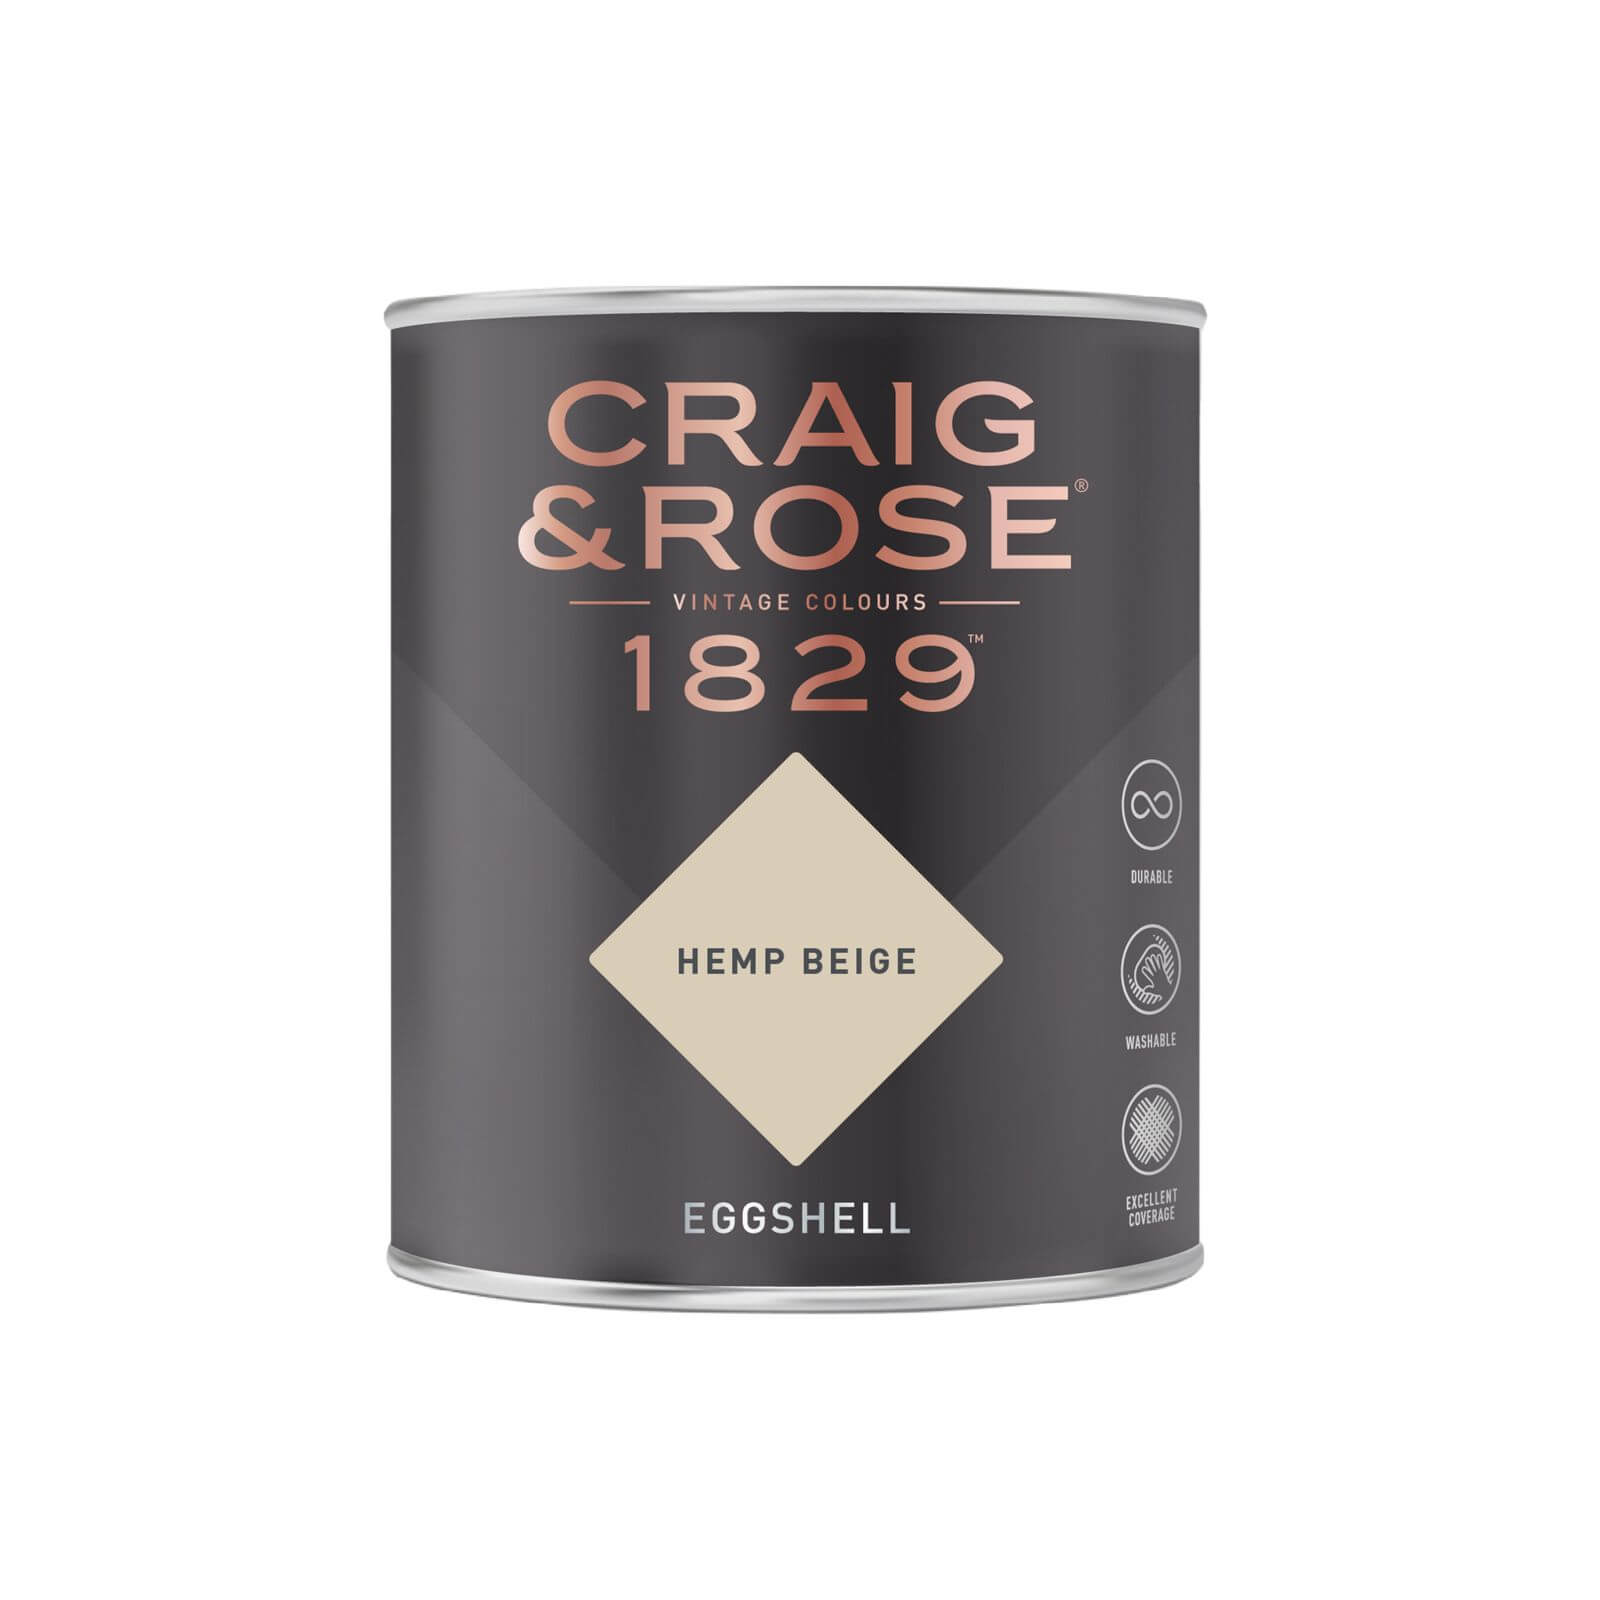 Craig & Rose 1829 Eggshell Paint Hemp Beige - 750ml